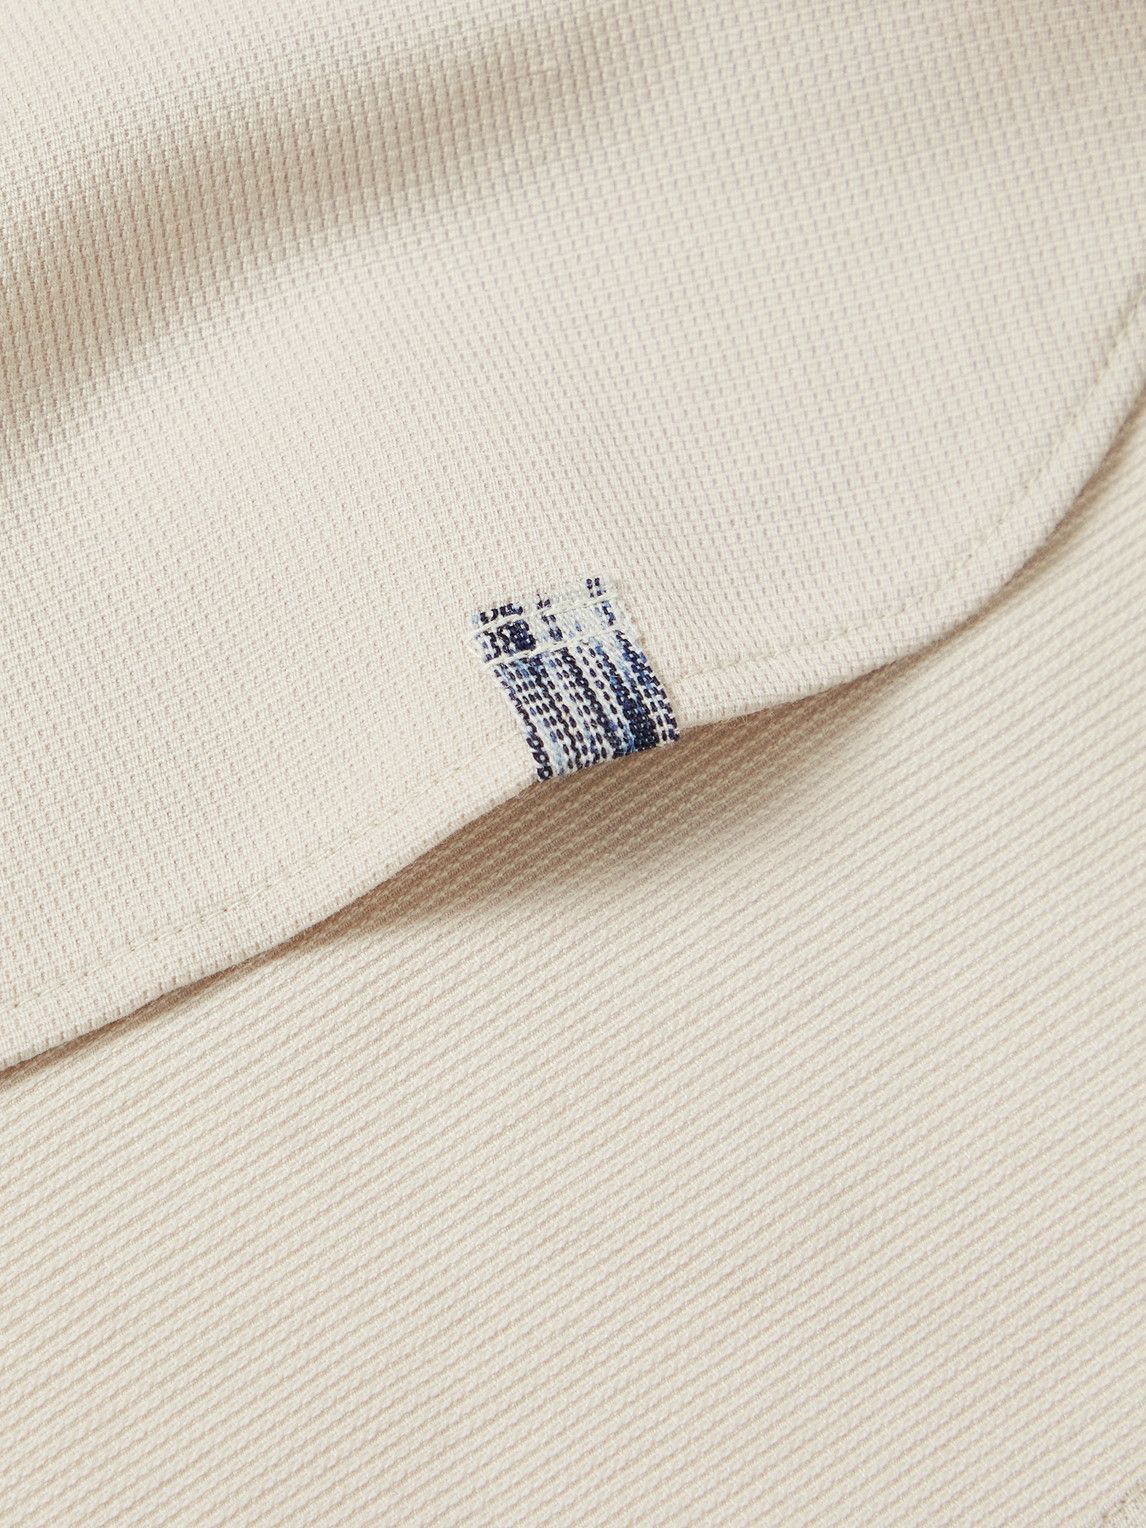 Visvim - Dugout Wool, Cotton and Linen-Blend Shirt - Neutrals Visvim